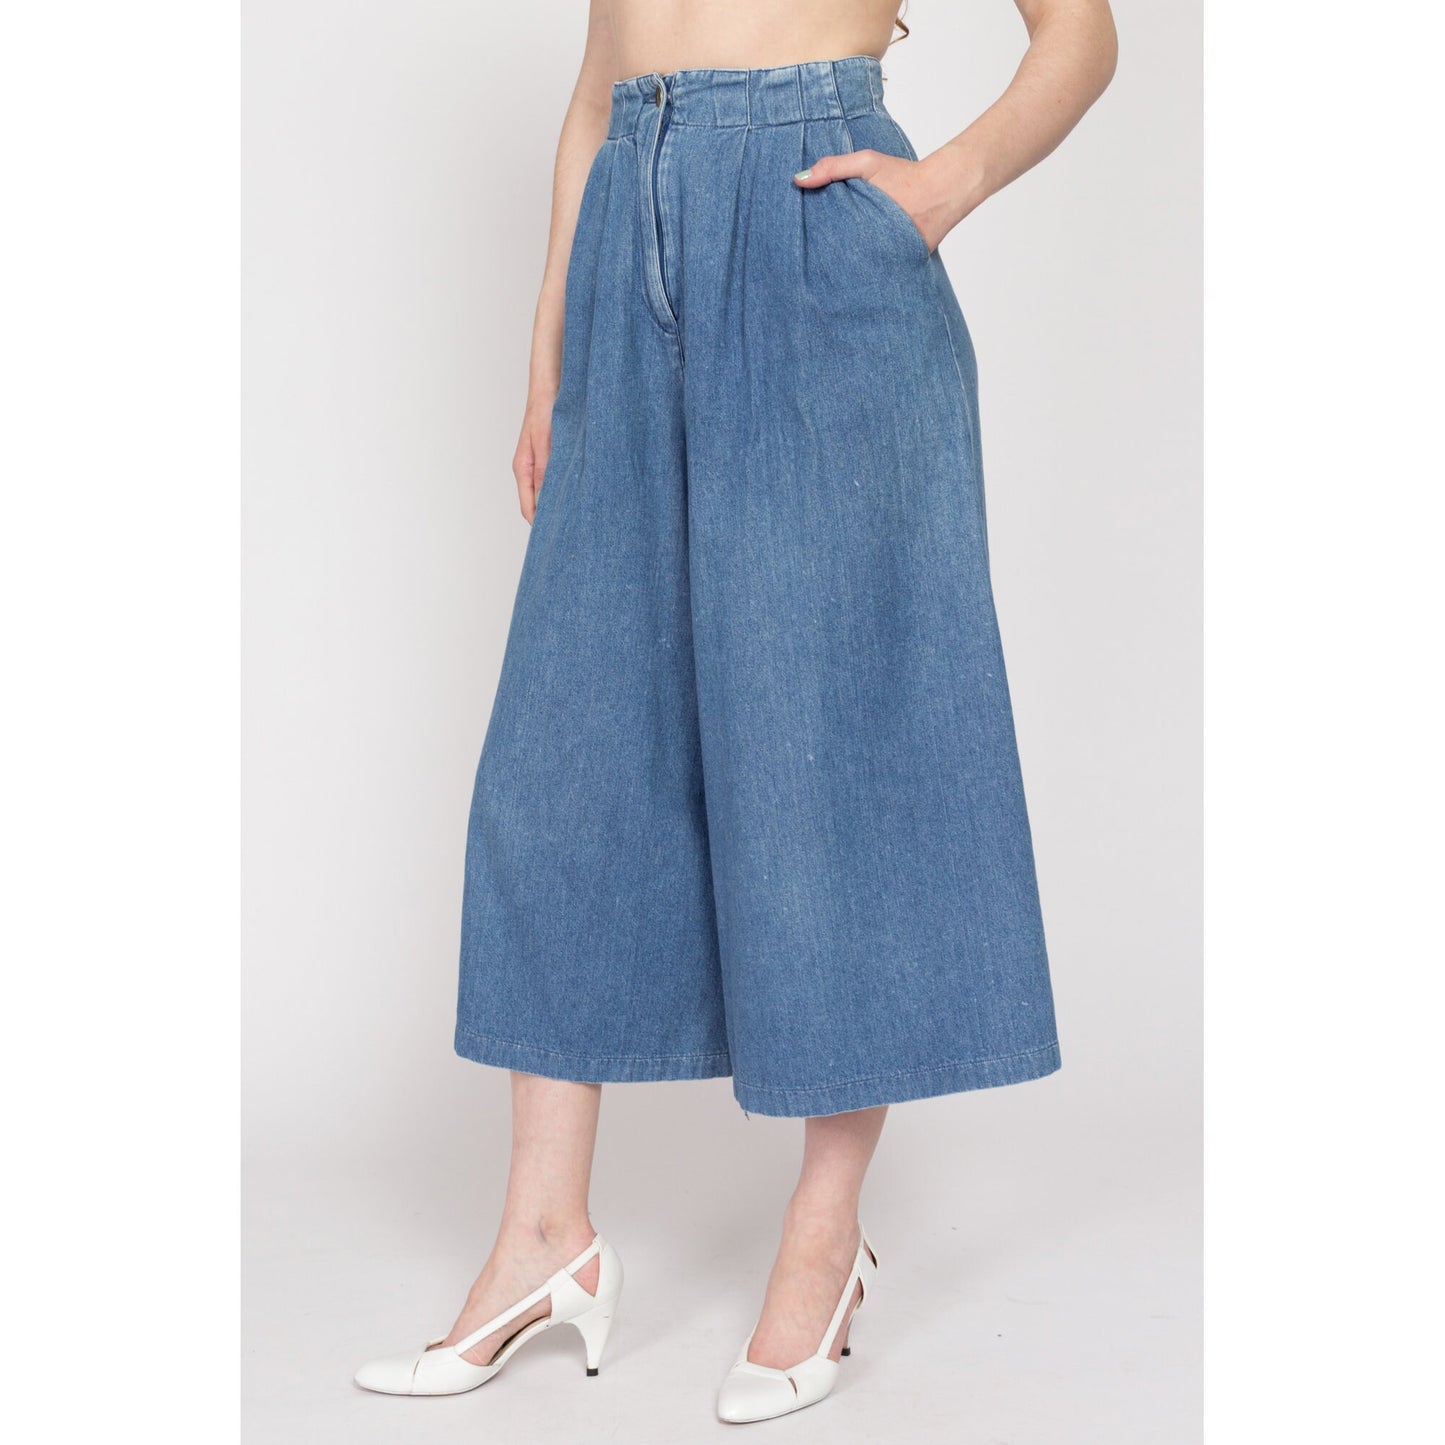 XS 80s Denim Long Culotte Shorts 25" | Vintage High Waisted Wide Leg Blue Jean Pocket Capri Pants